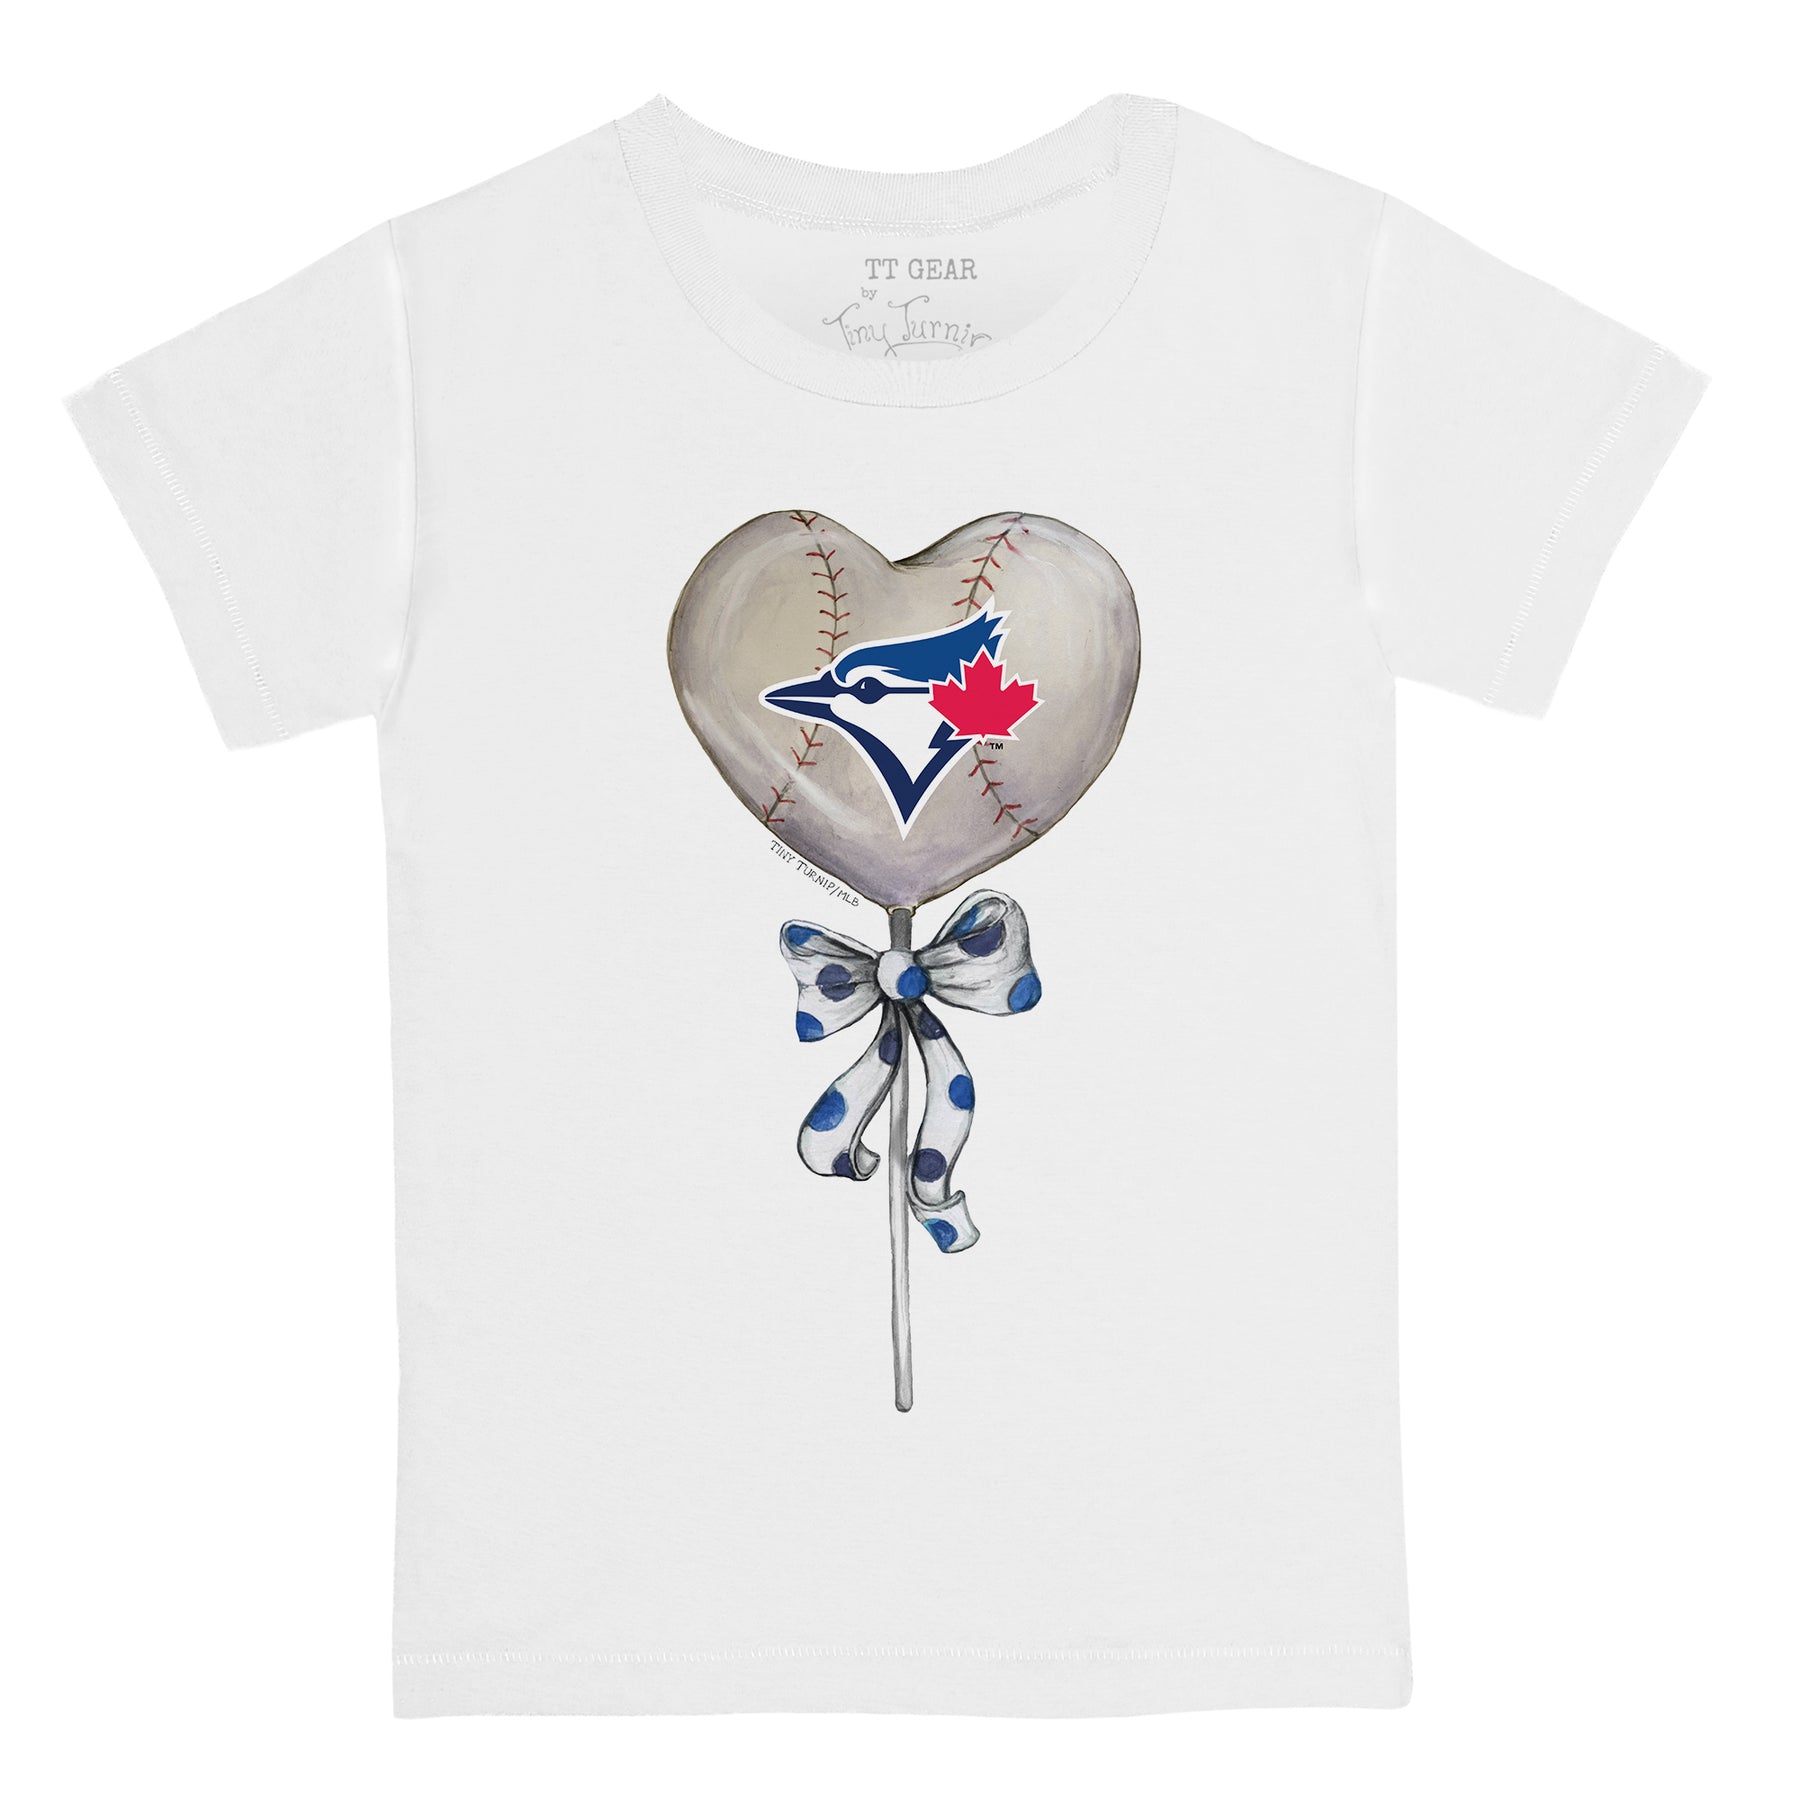 Women's Tiny Turnip White Toronto Blue Jays Baseball Babes T-Shirt Size: Small